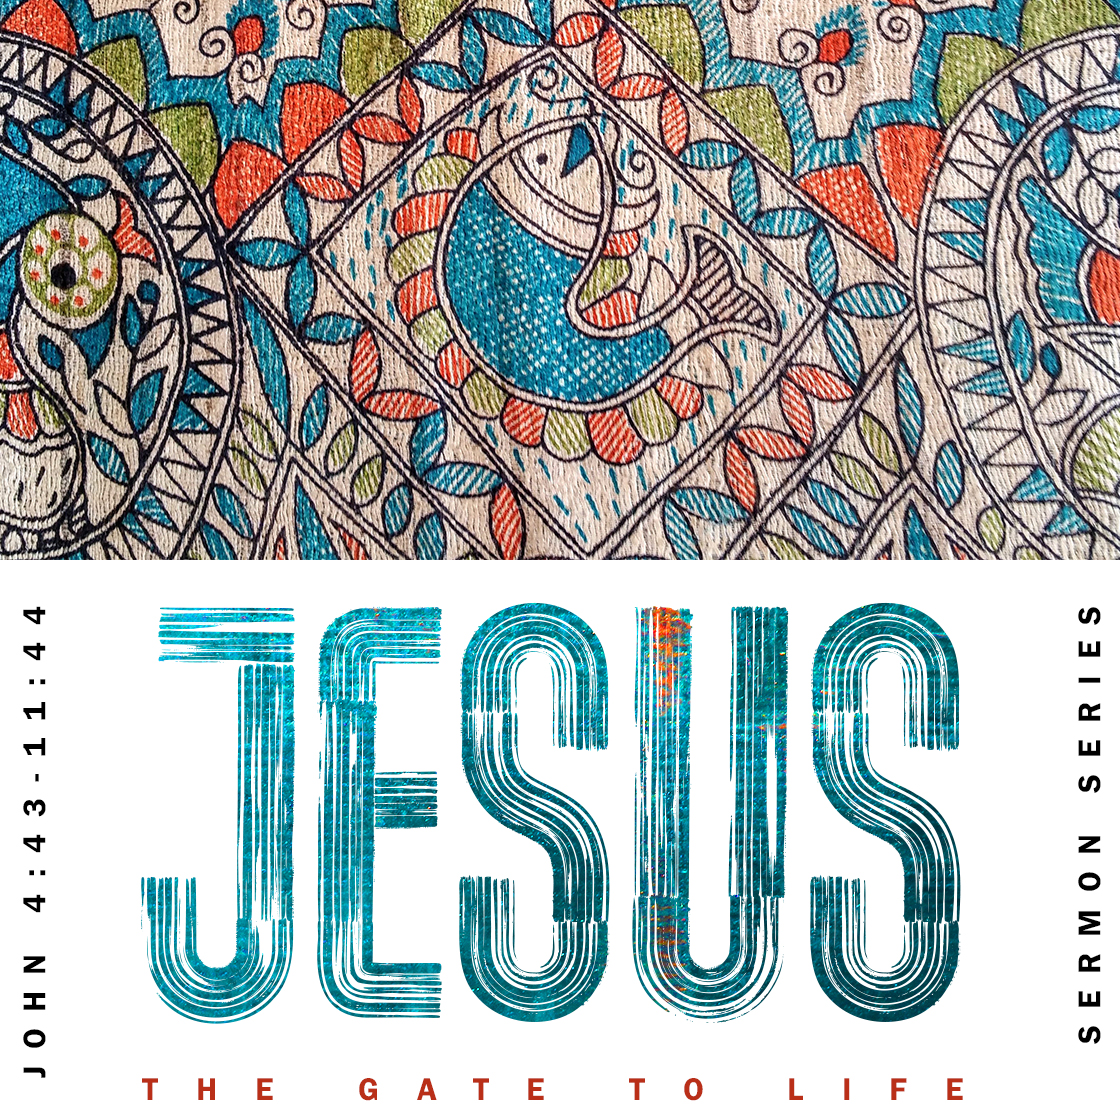 Jesus: The Gate to Life